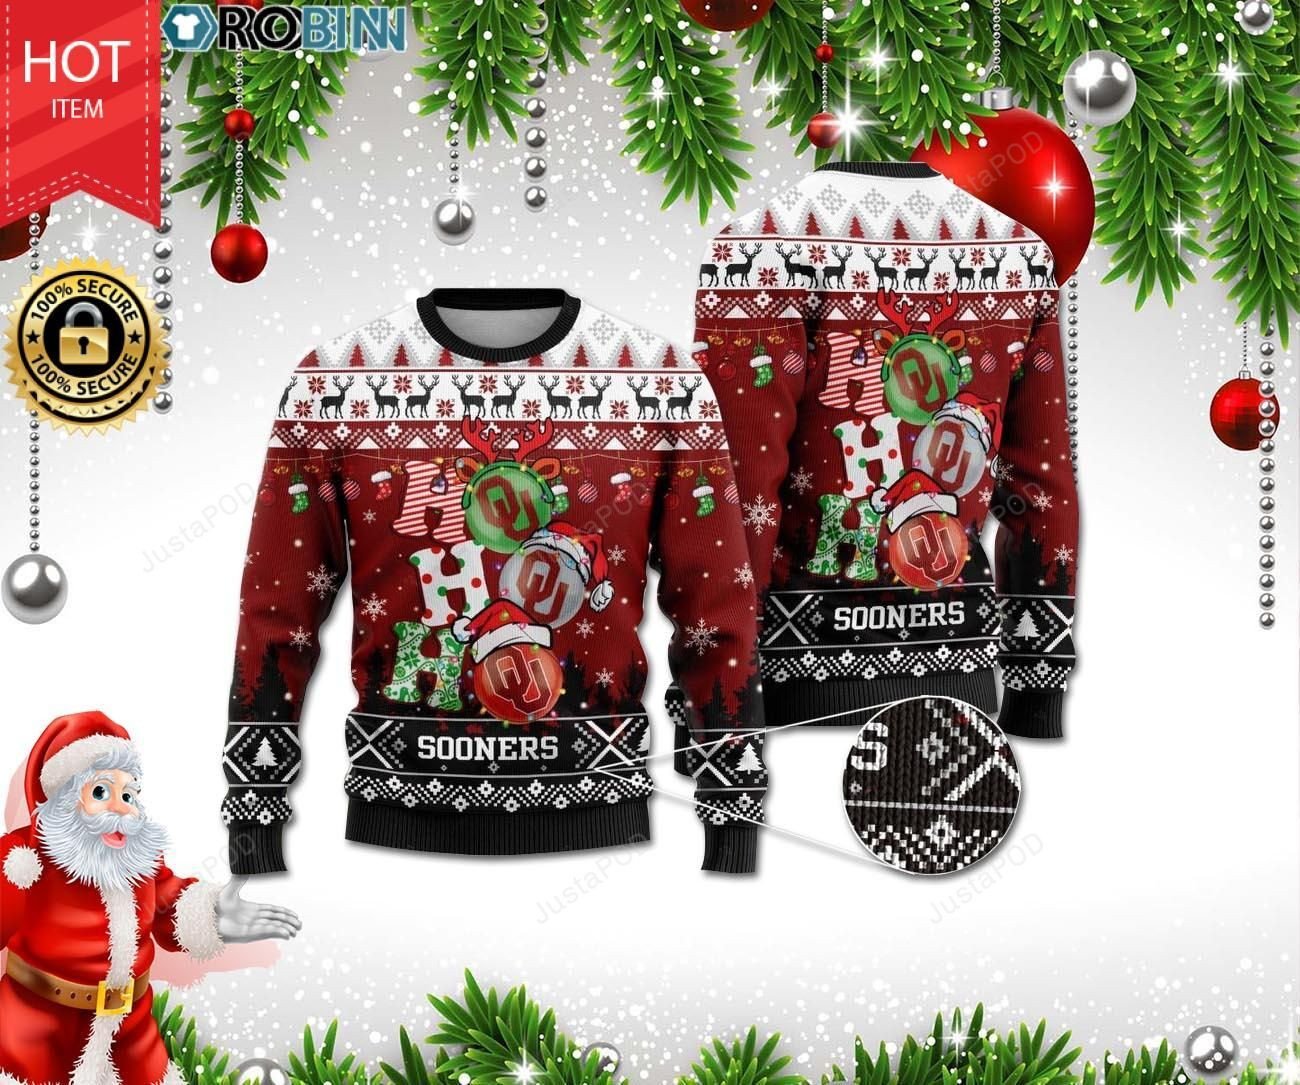 Oklahoma Sooners Ho Ho Ho 3D Ugly Christmas Sweater